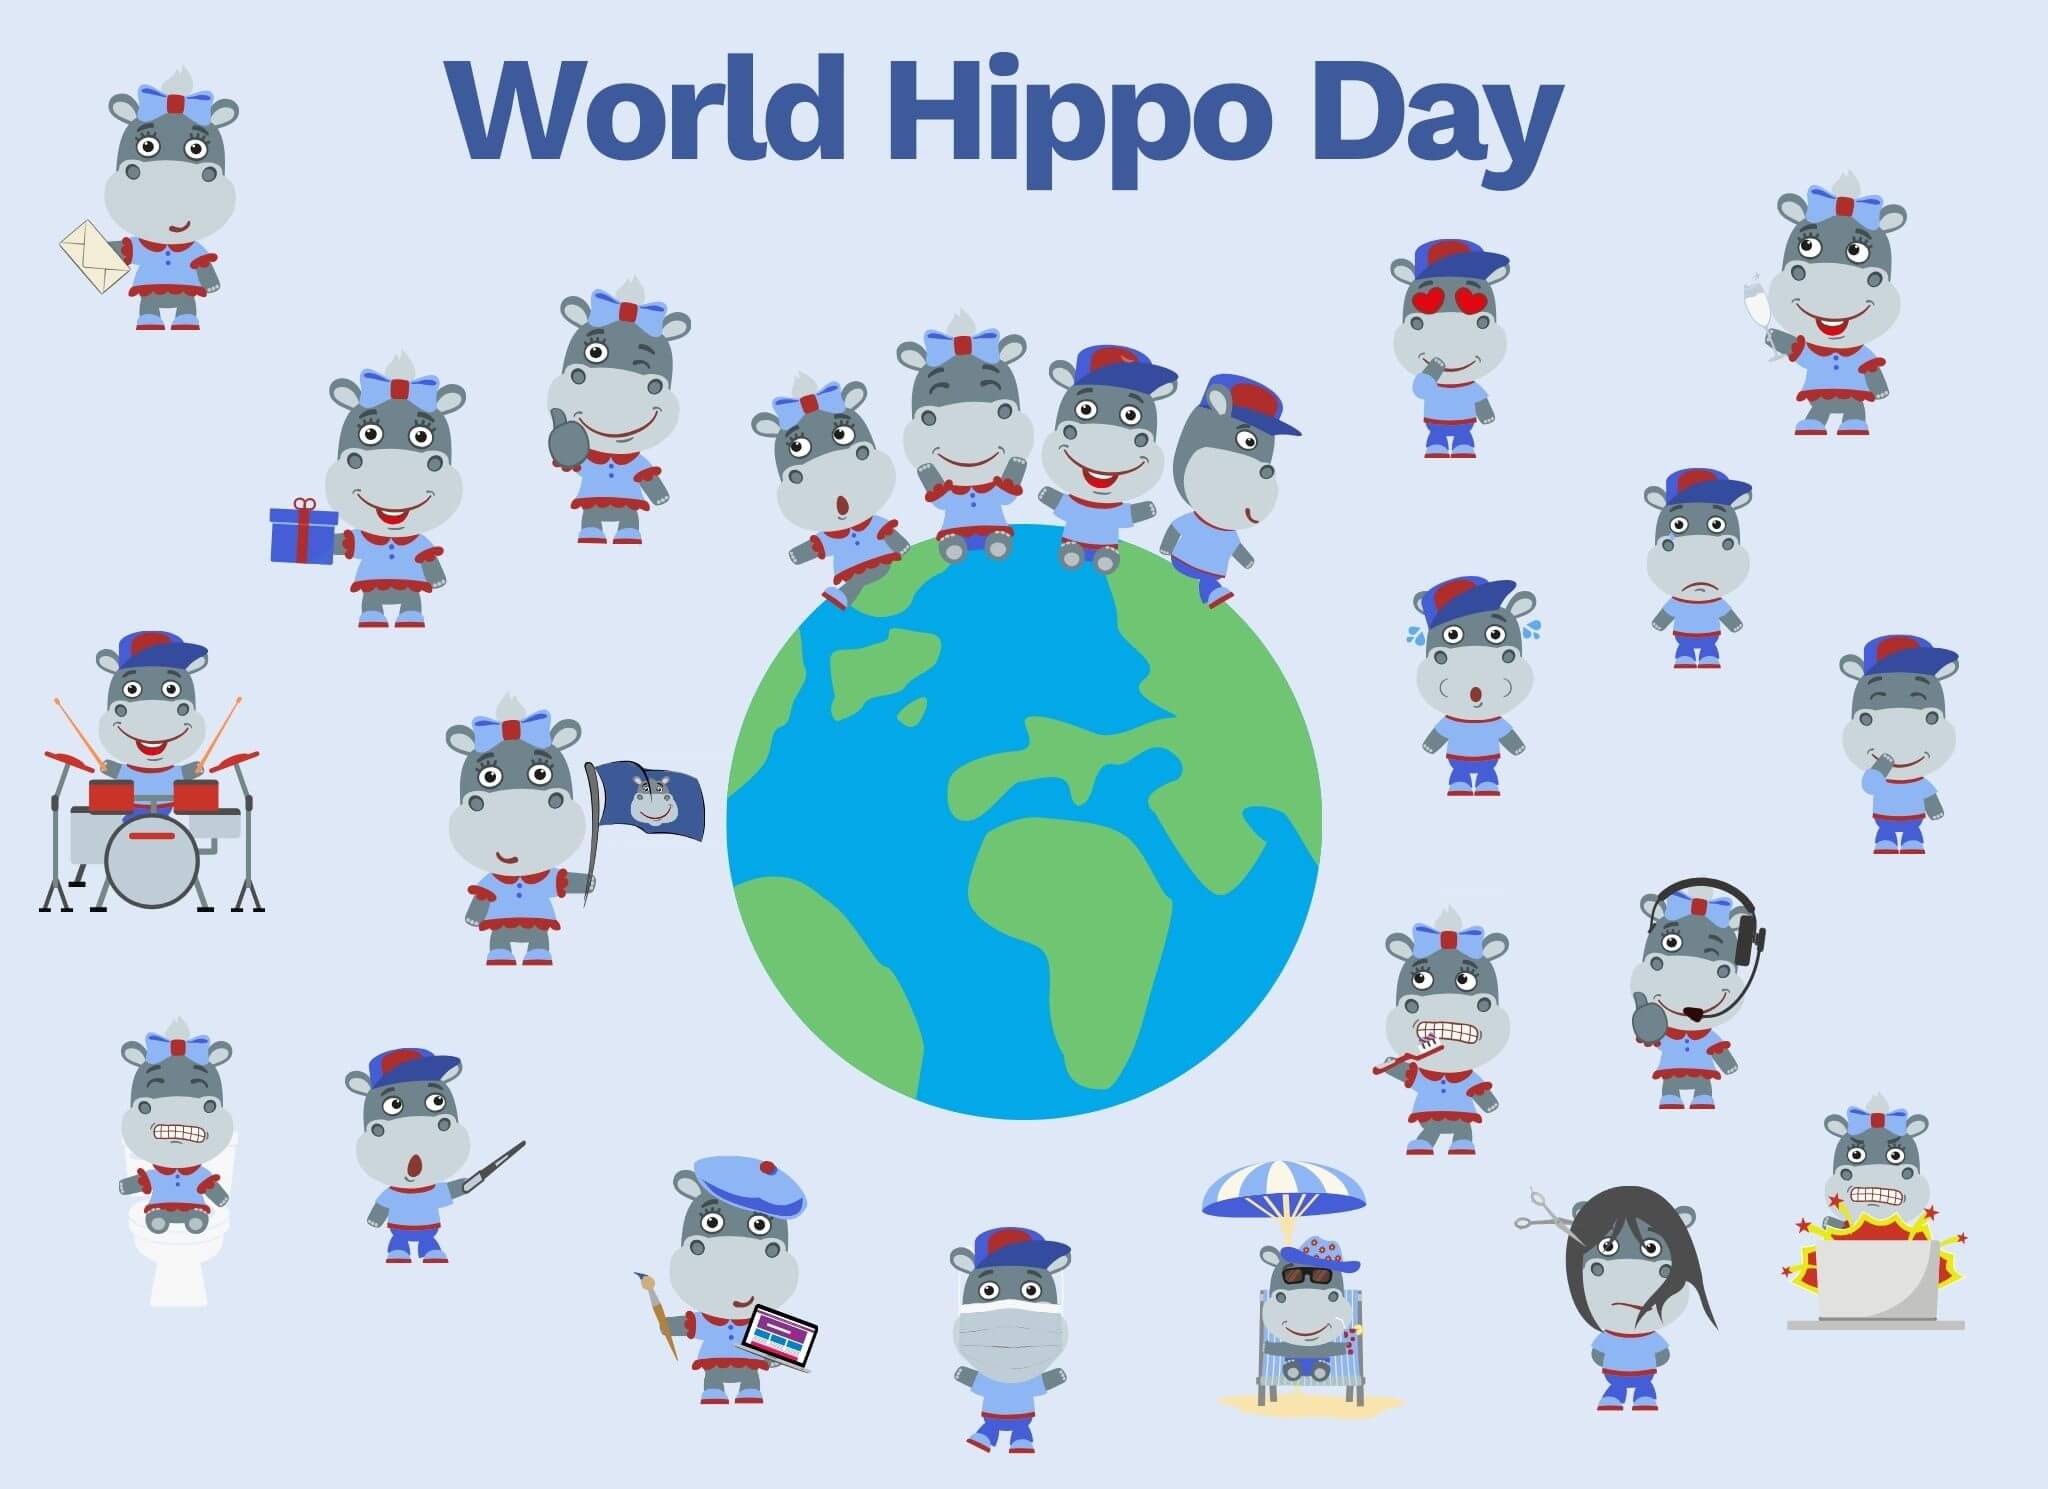 Let's Celebrate World Hippo Day